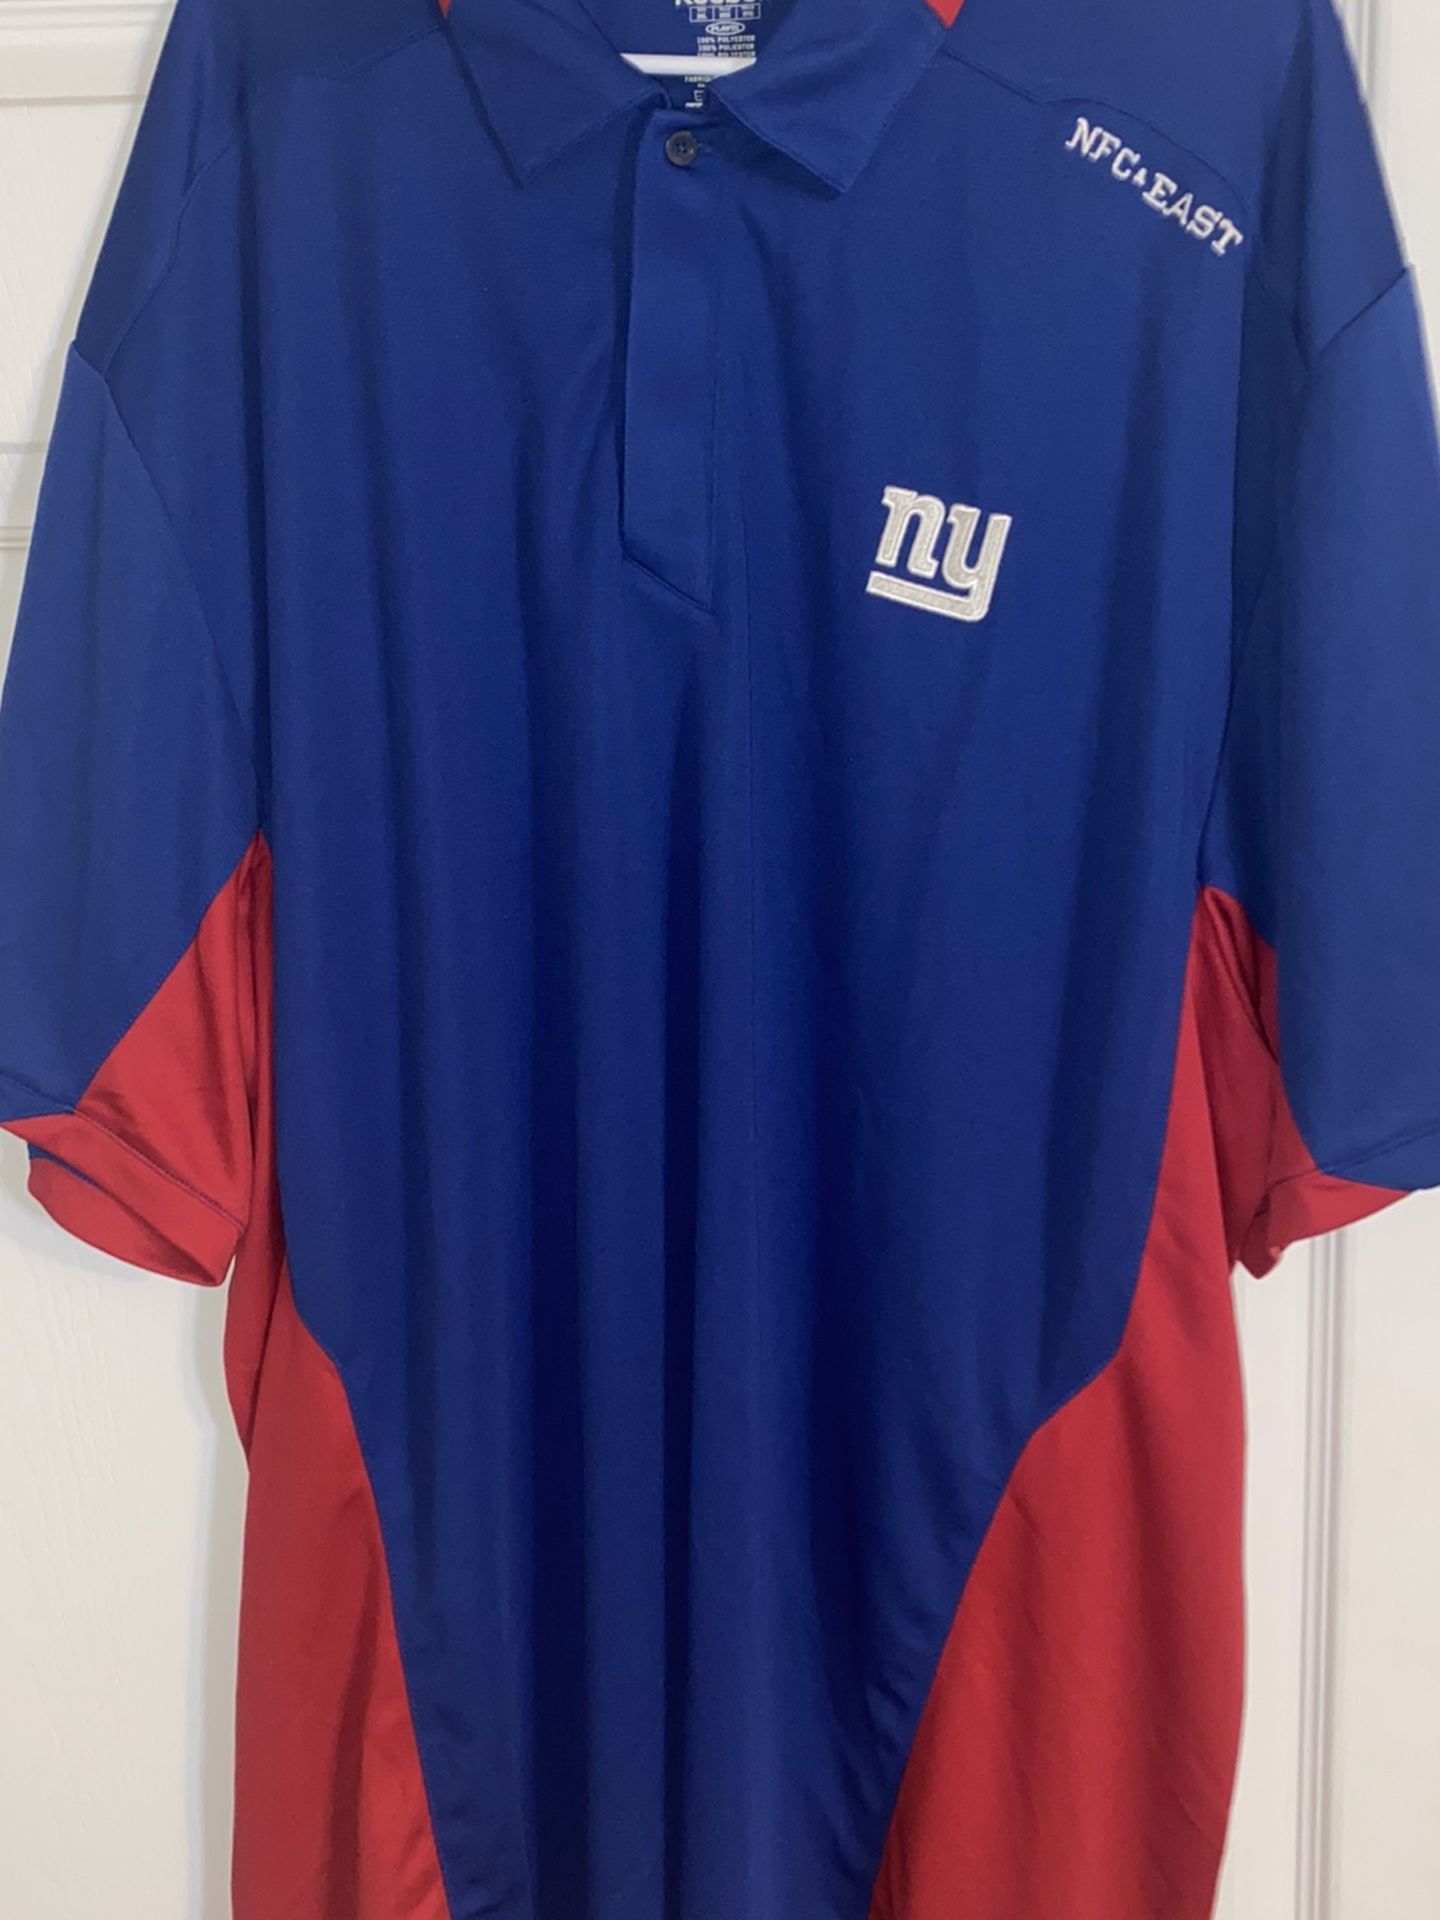 Reebok Golf Shirt, New York Giants, Extra Extra Extra Large, $10